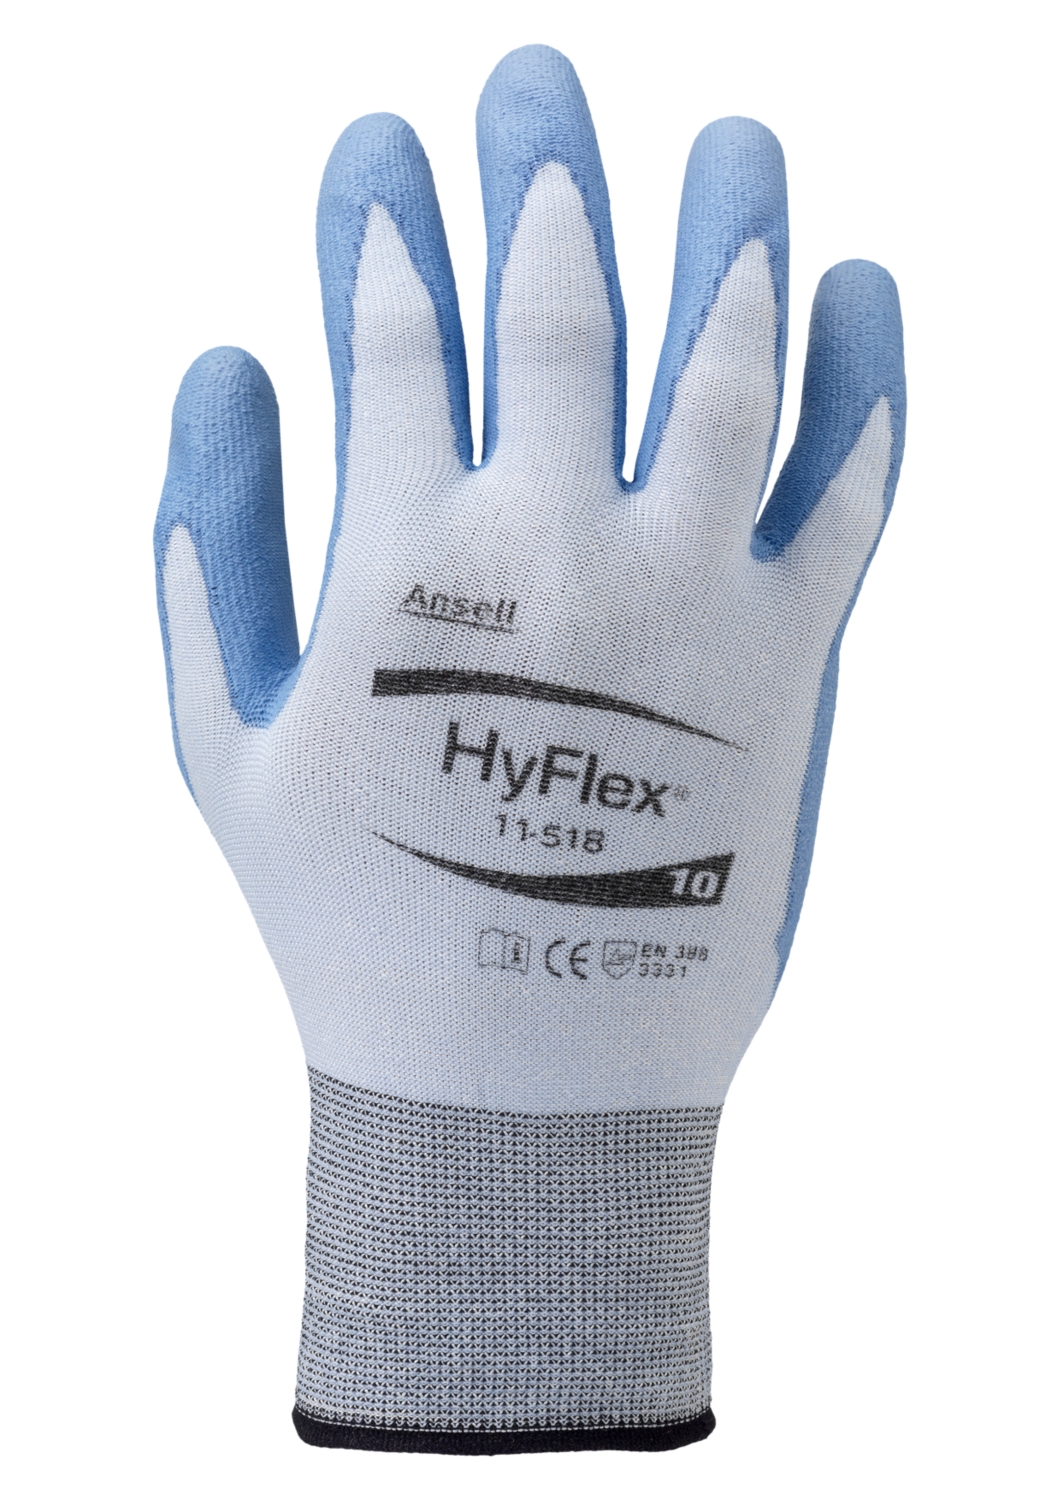 Hyflex 11-518